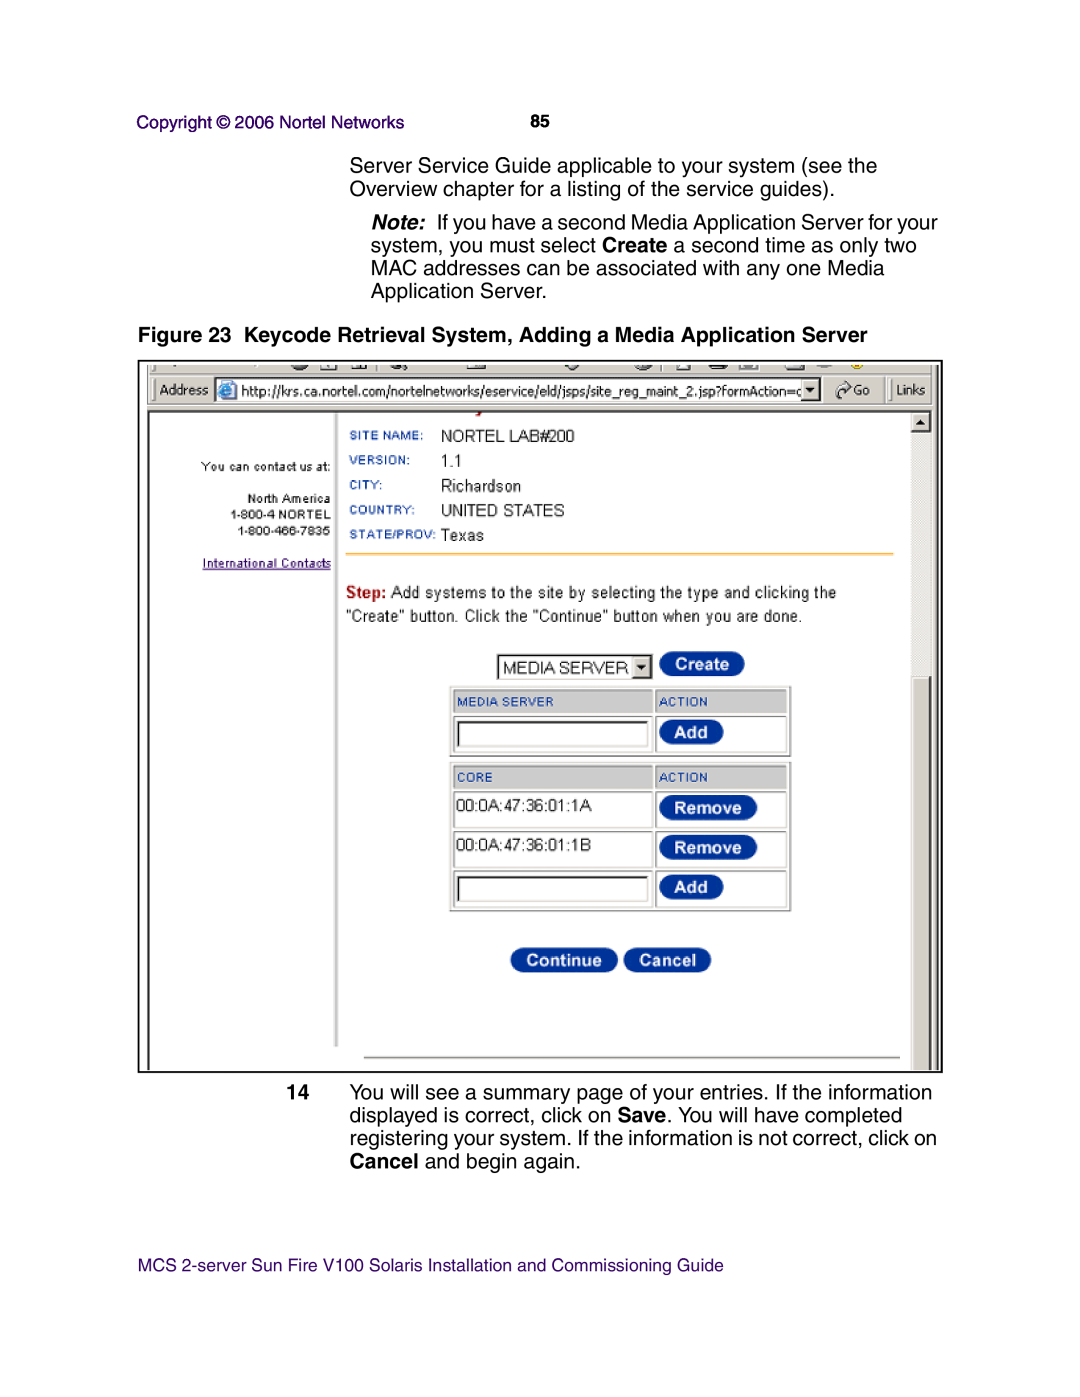 Nortel Networks V100 manual Keycode Retrieval System, Adding a Media Application Server 